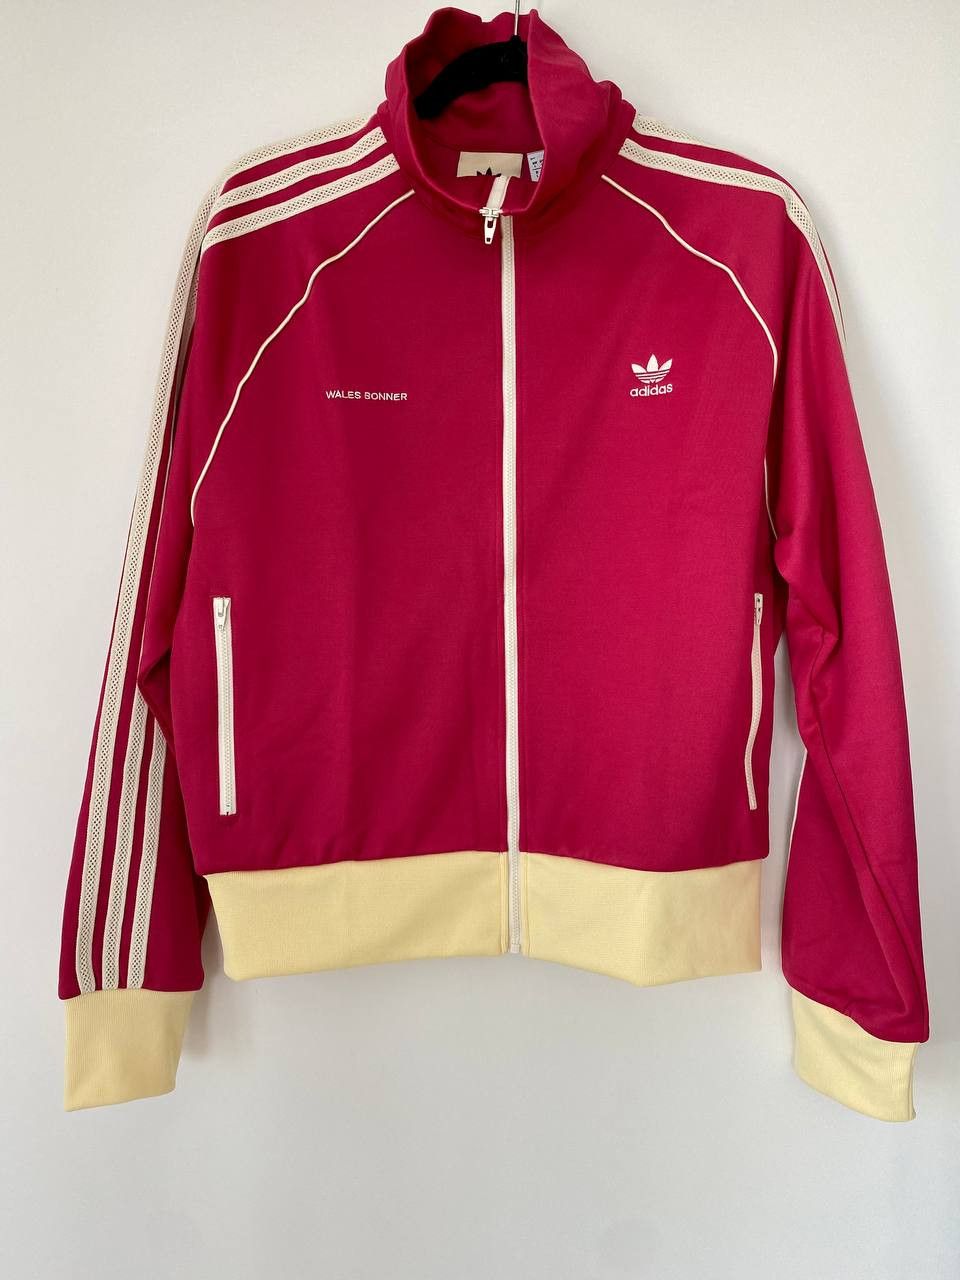 Wales Bonner Green & Navy Adidas Originals Edition Lovers Track Jacket for  Men